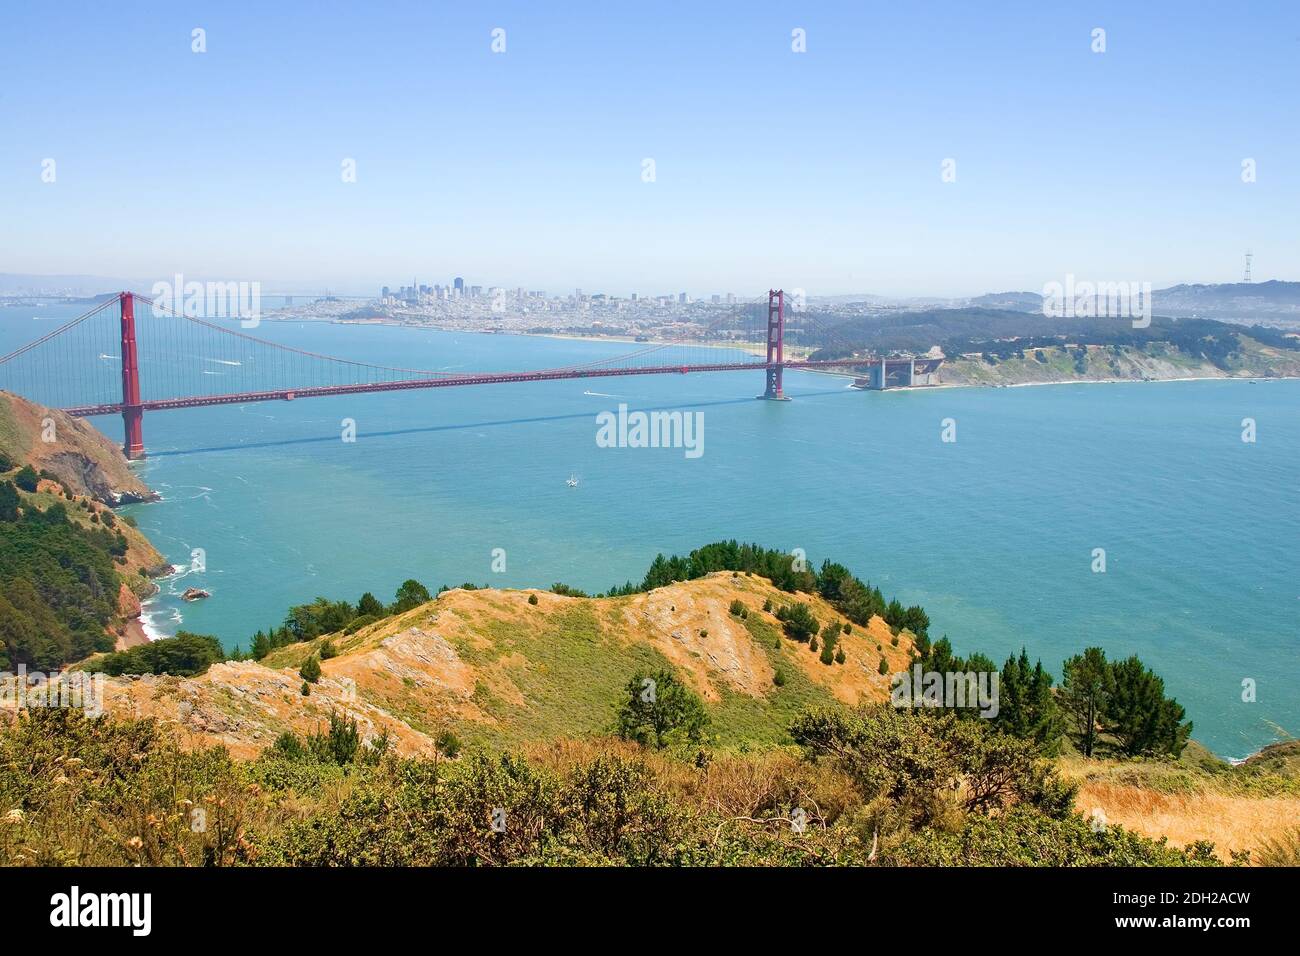 View Of The Famous Golden Gate Bridge In San Francisco, California Stock Photo